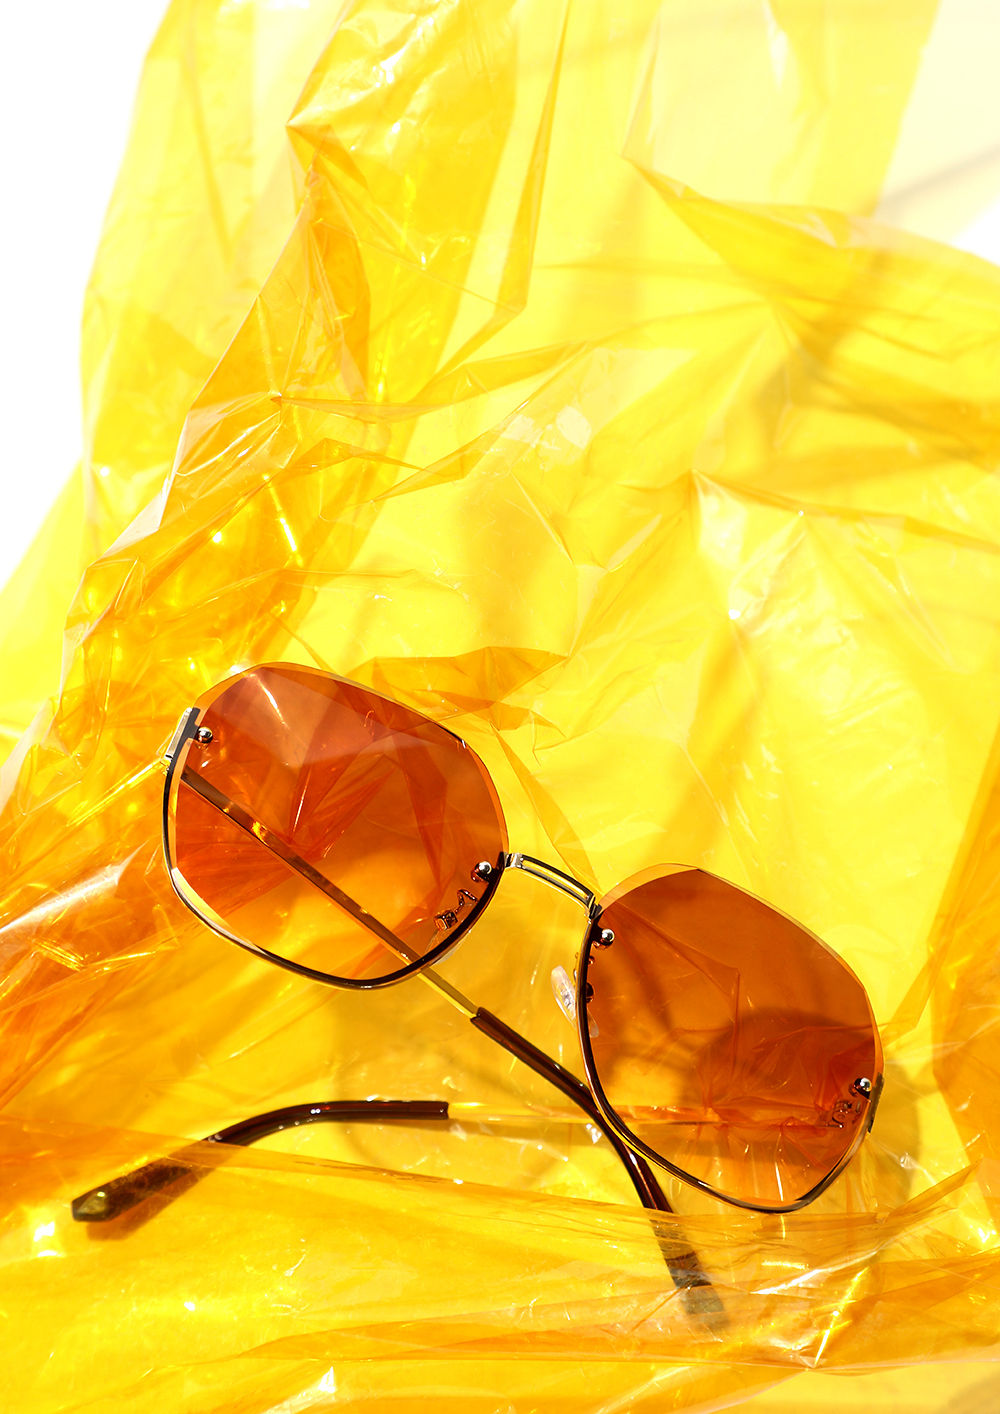 Buy BAERFIT Round Sunglasses for Men & Women | Cooling Glass for Men &  Women | Shades for Men & Women | Allu Arjun Inspired Sunglass Goggles -  (BLUE) at Amazon.in